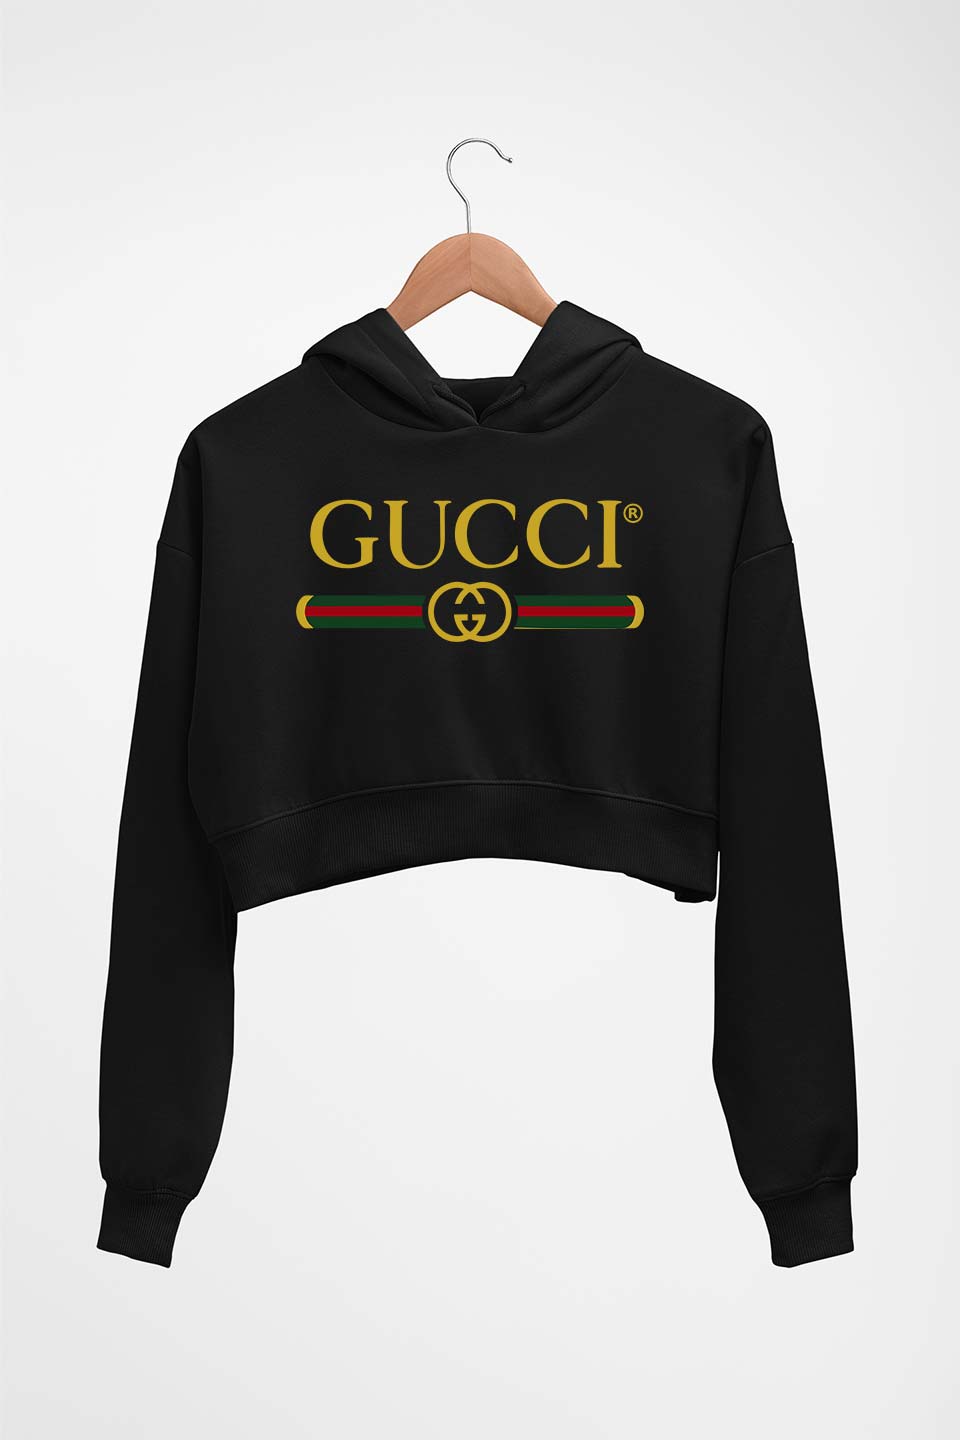 gucci crop top sweatshirt